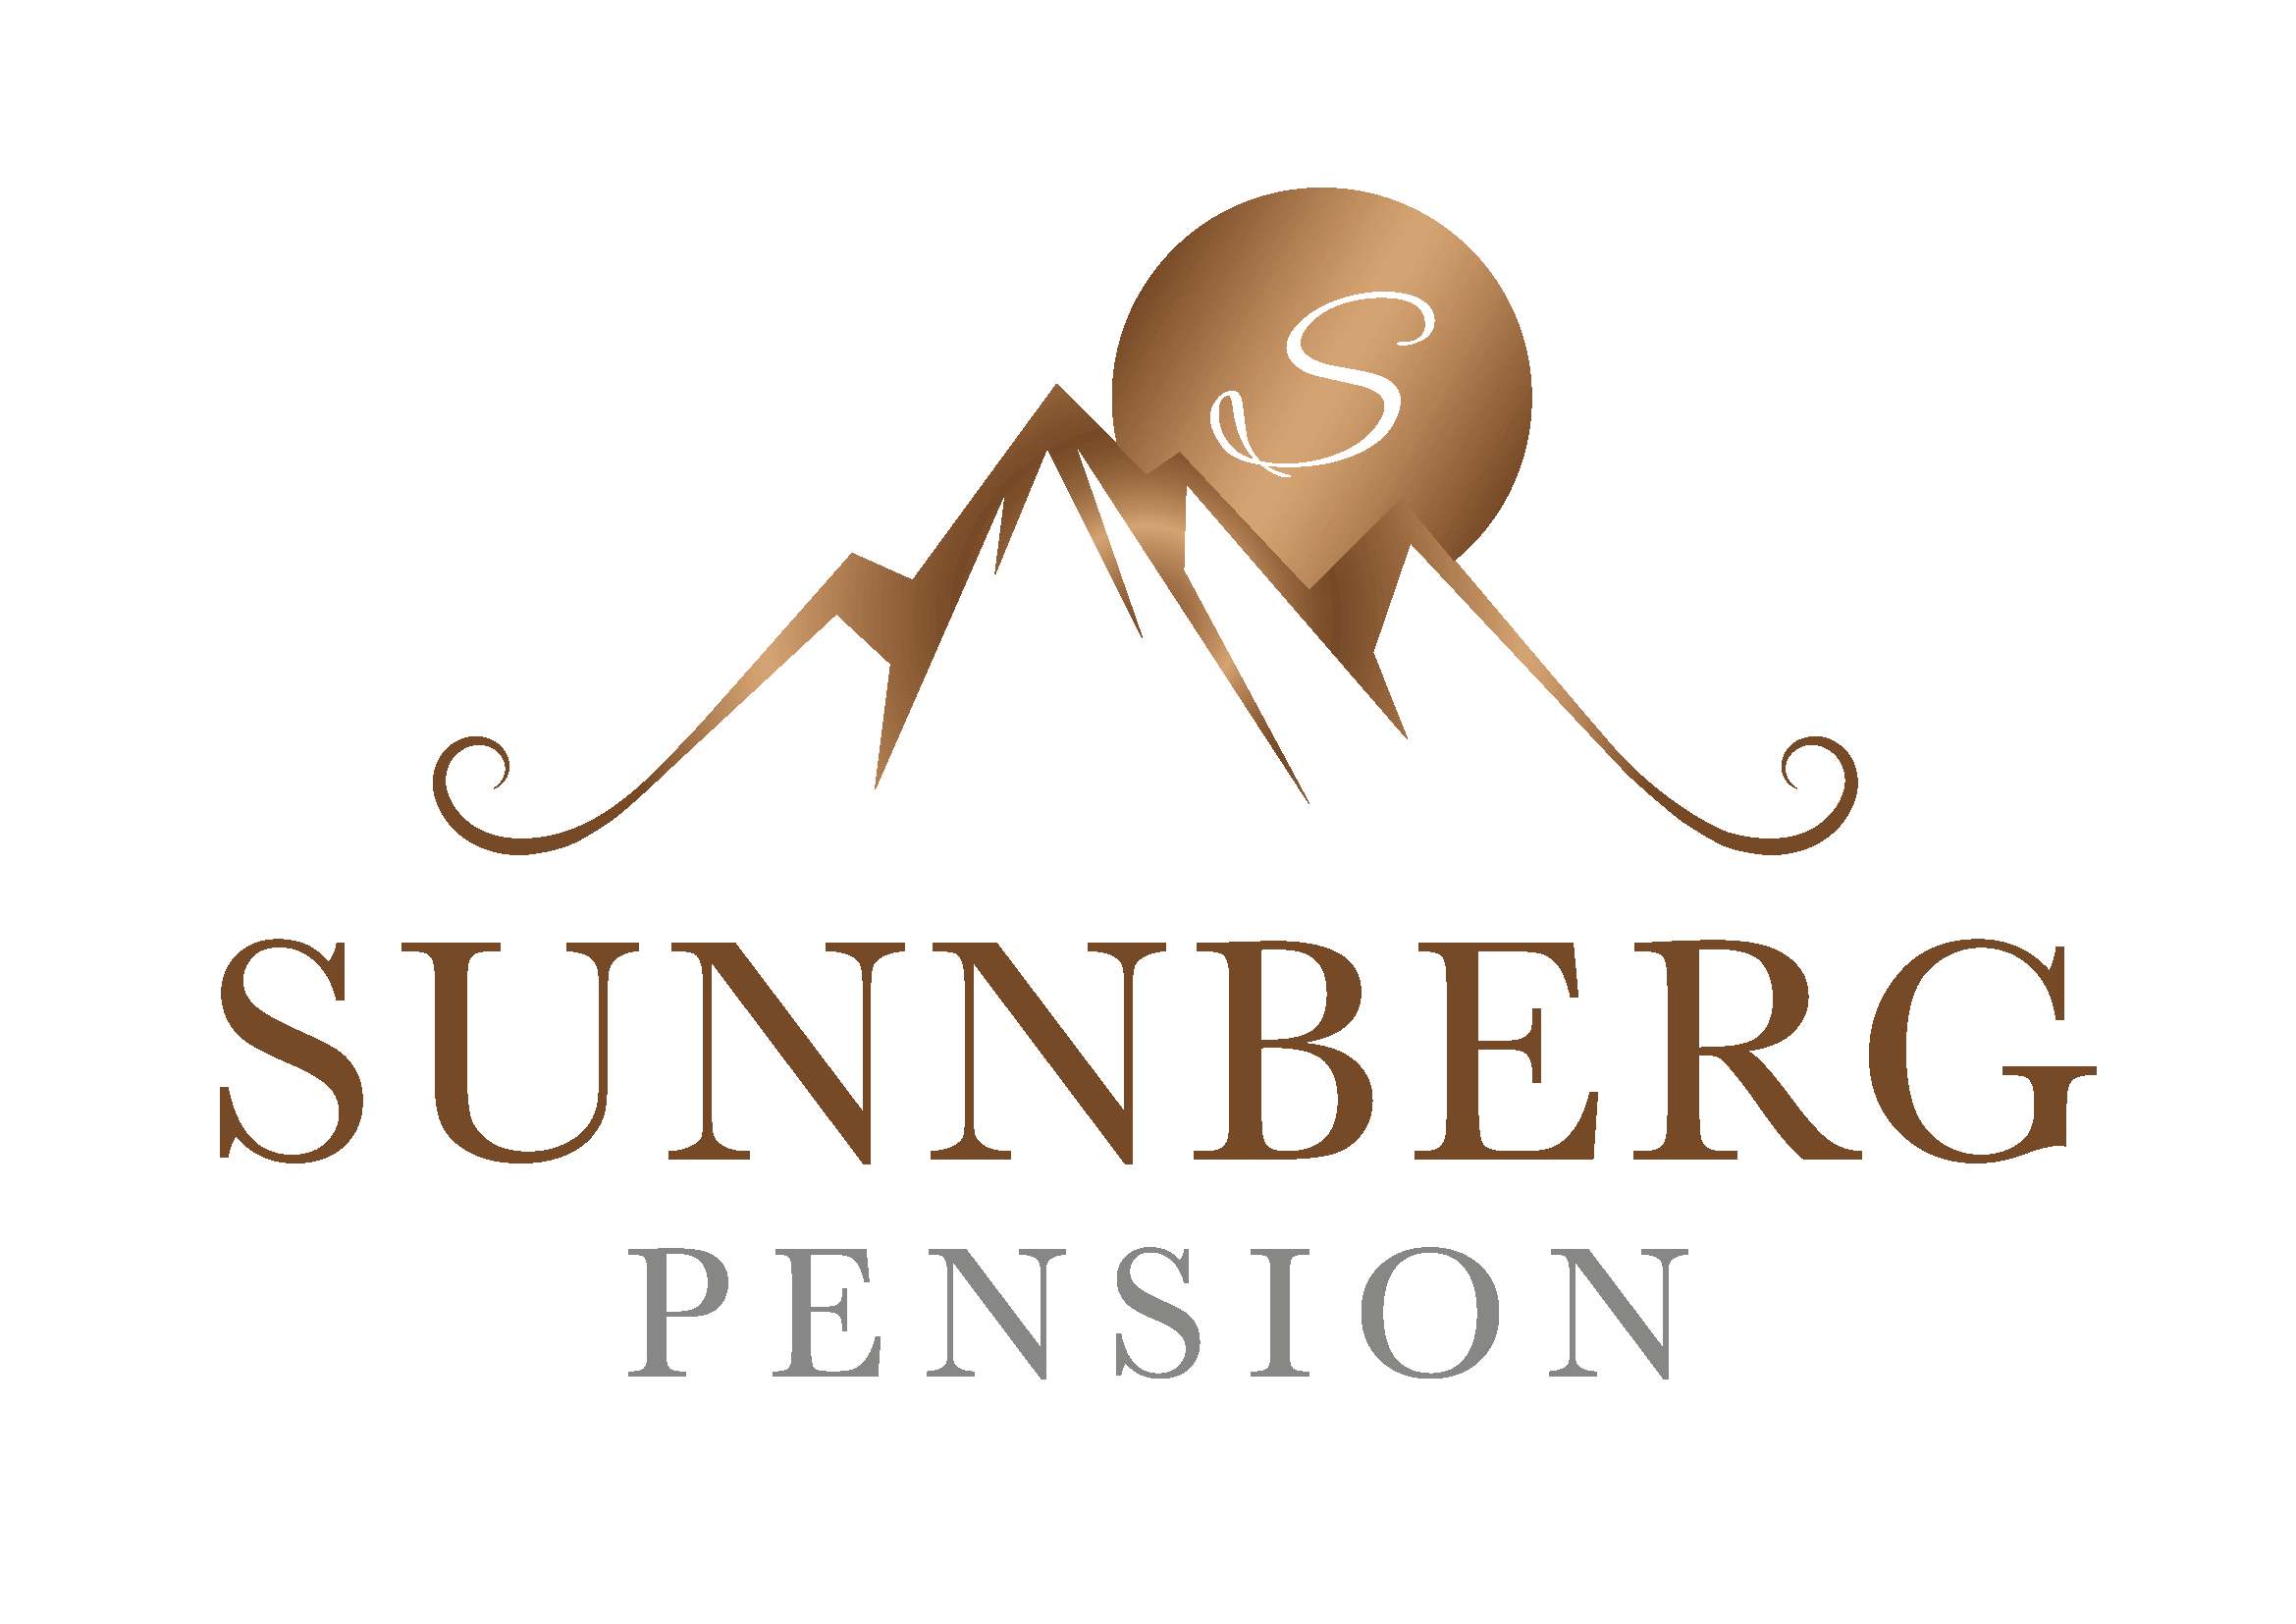 Pension Sunnberg